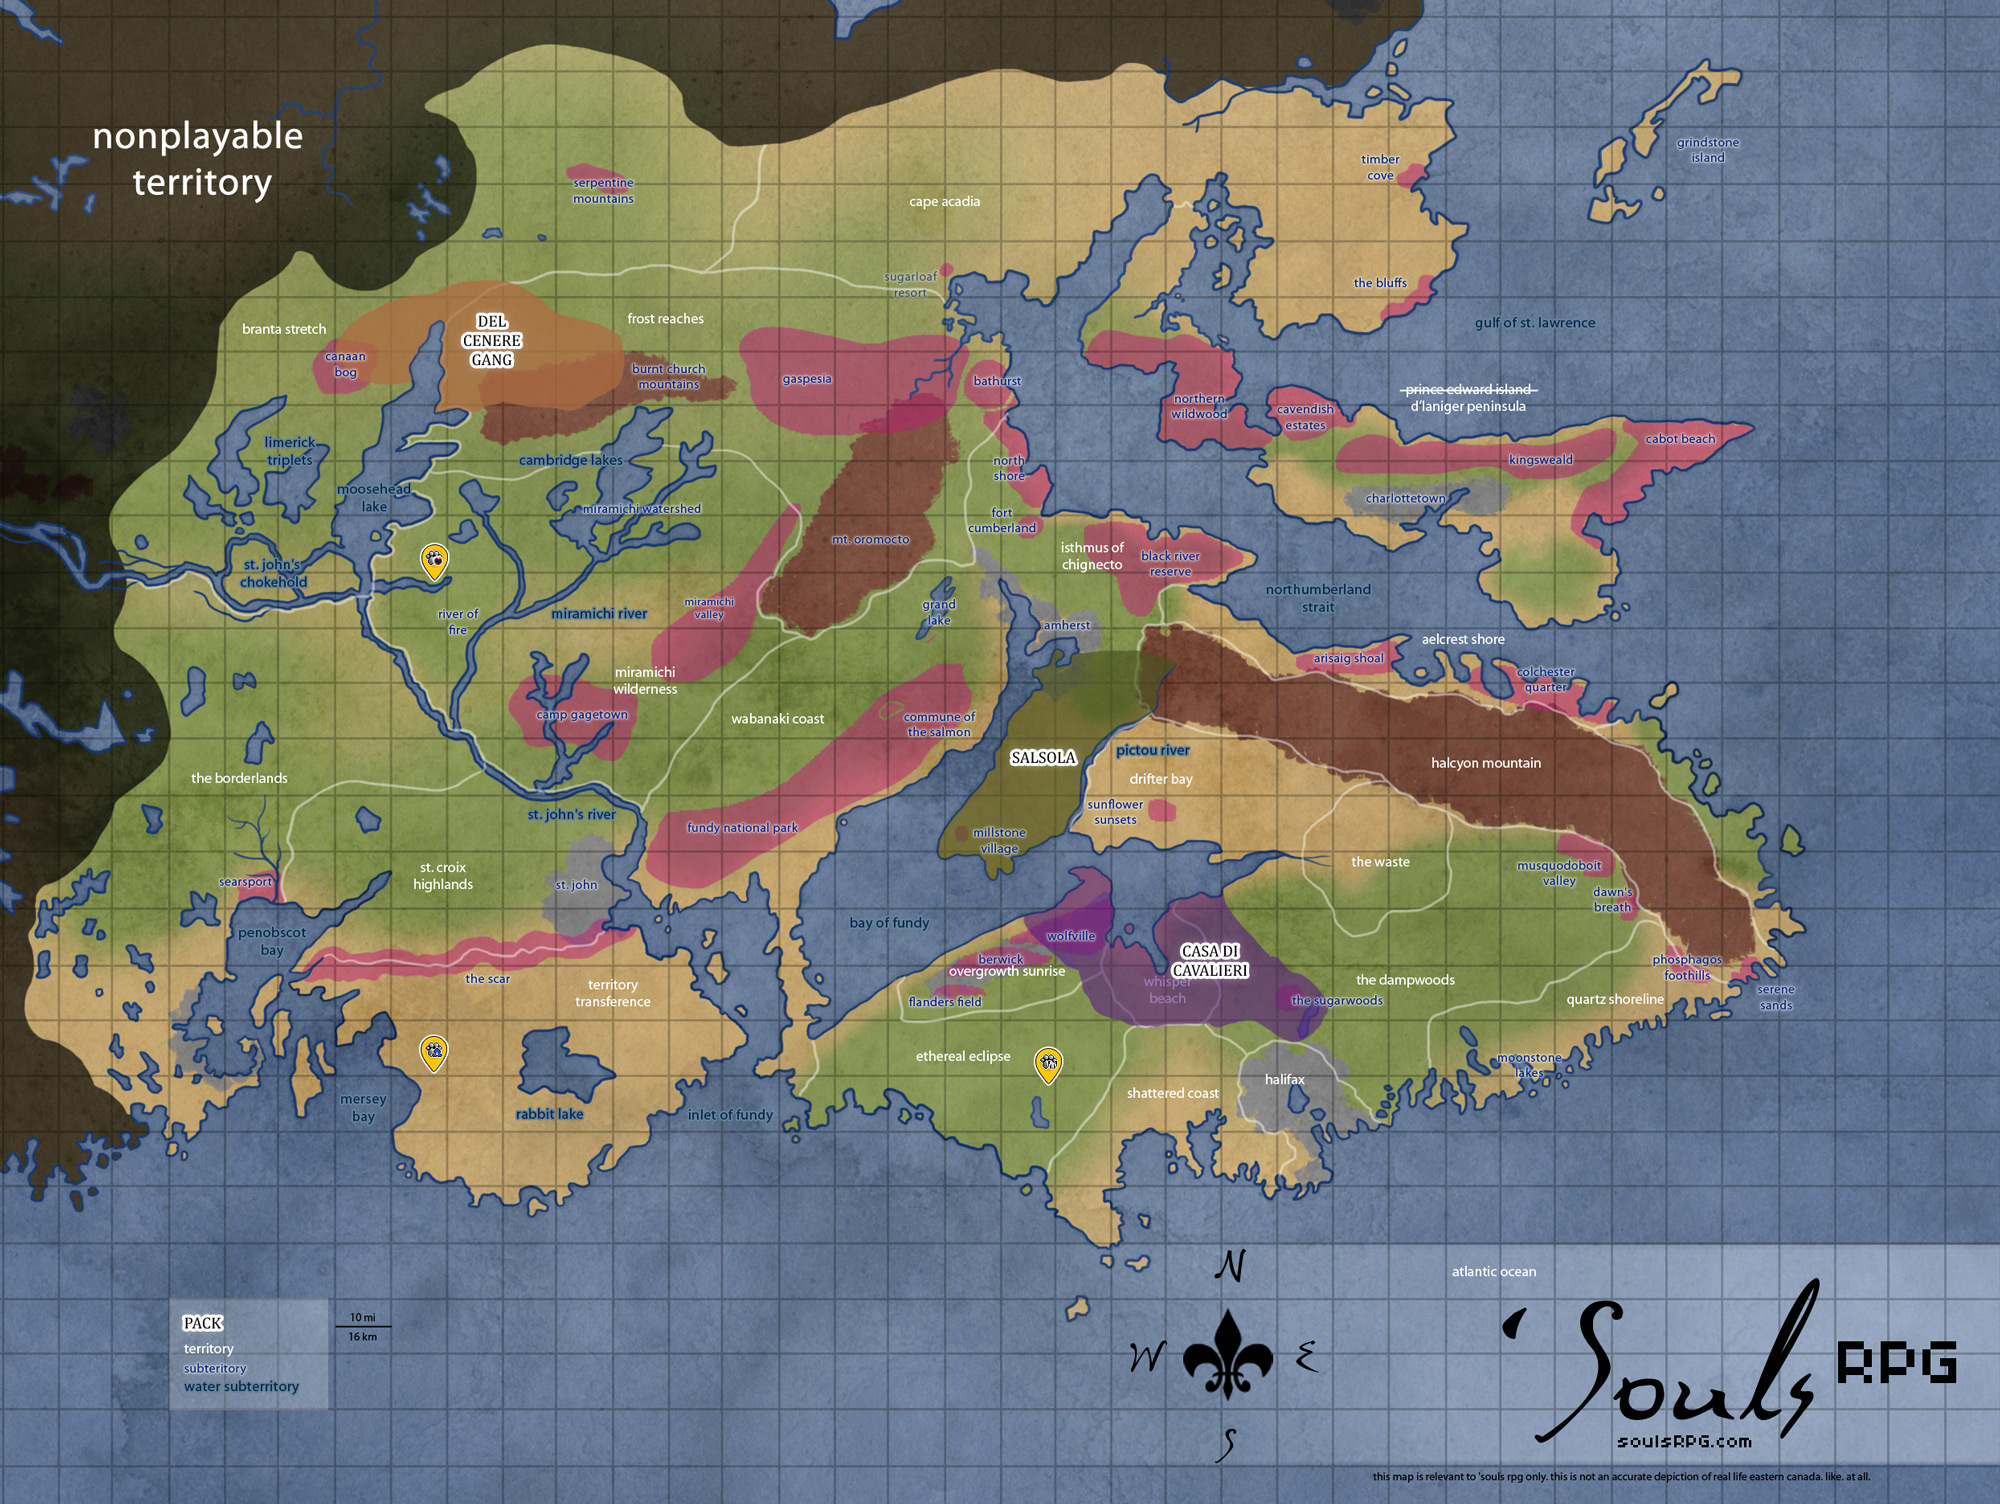 'Souls RPG Game Map